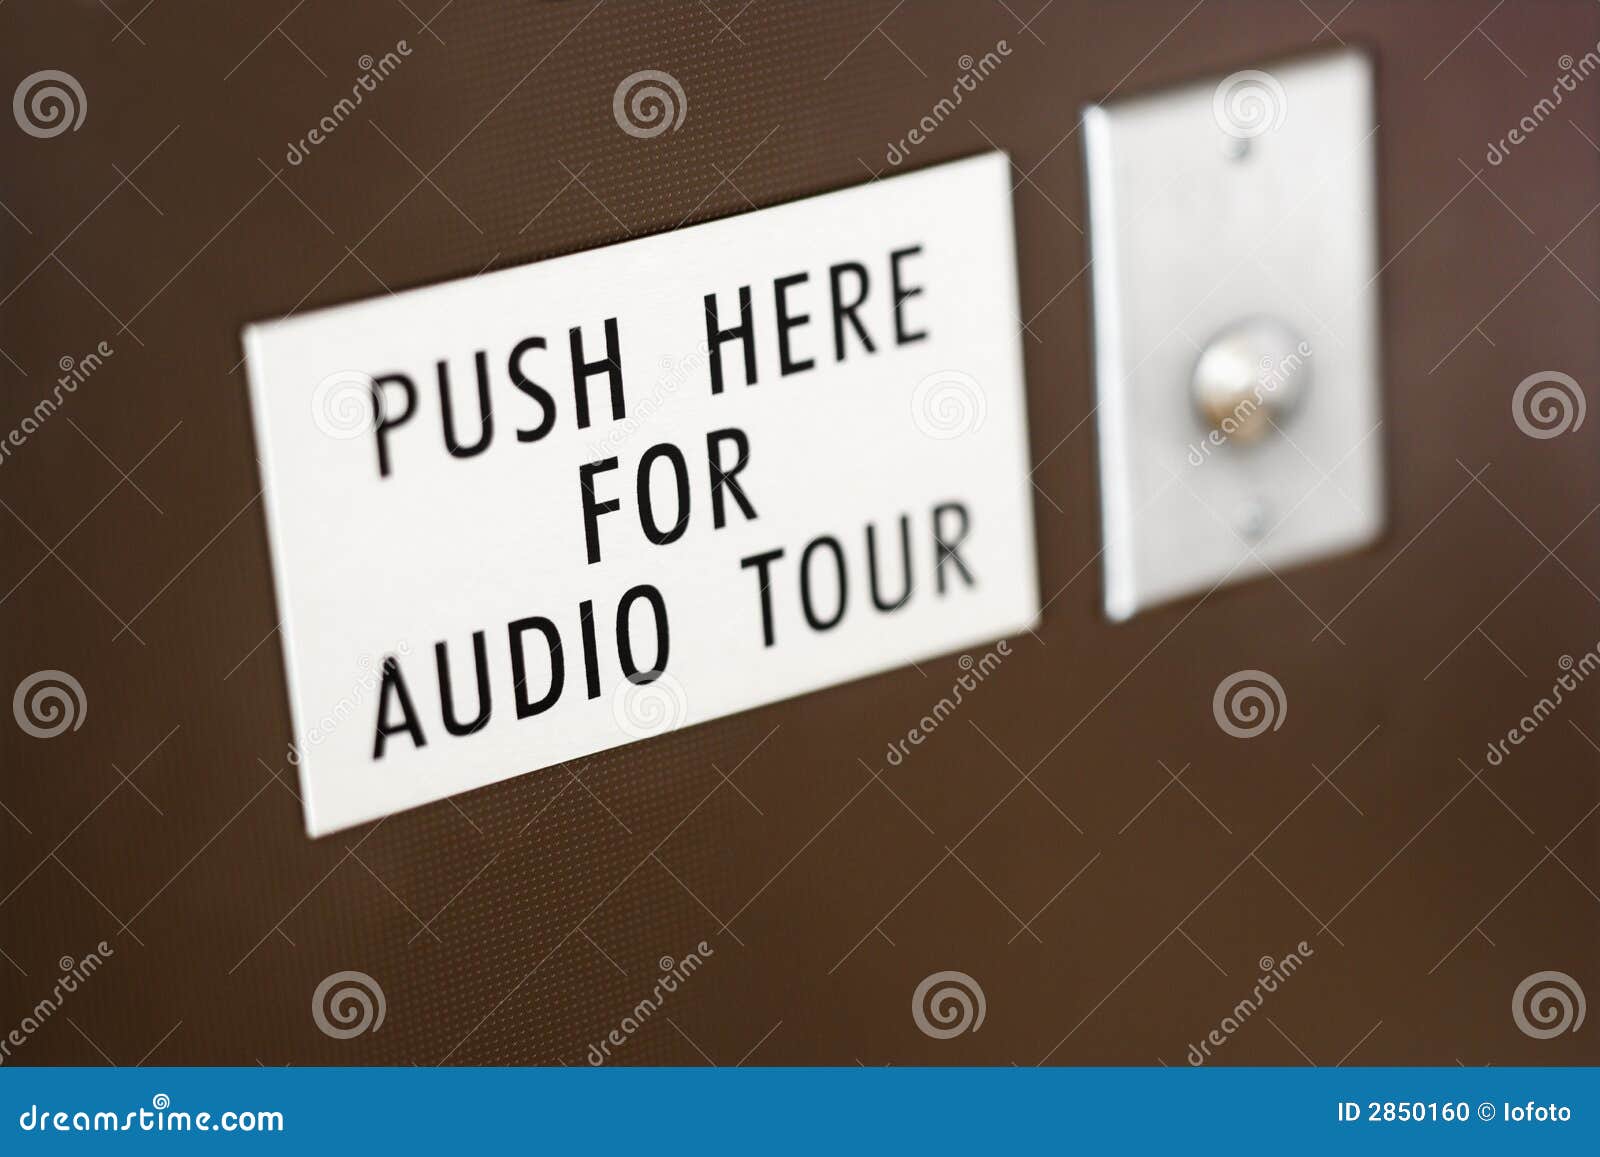 audio tour sign